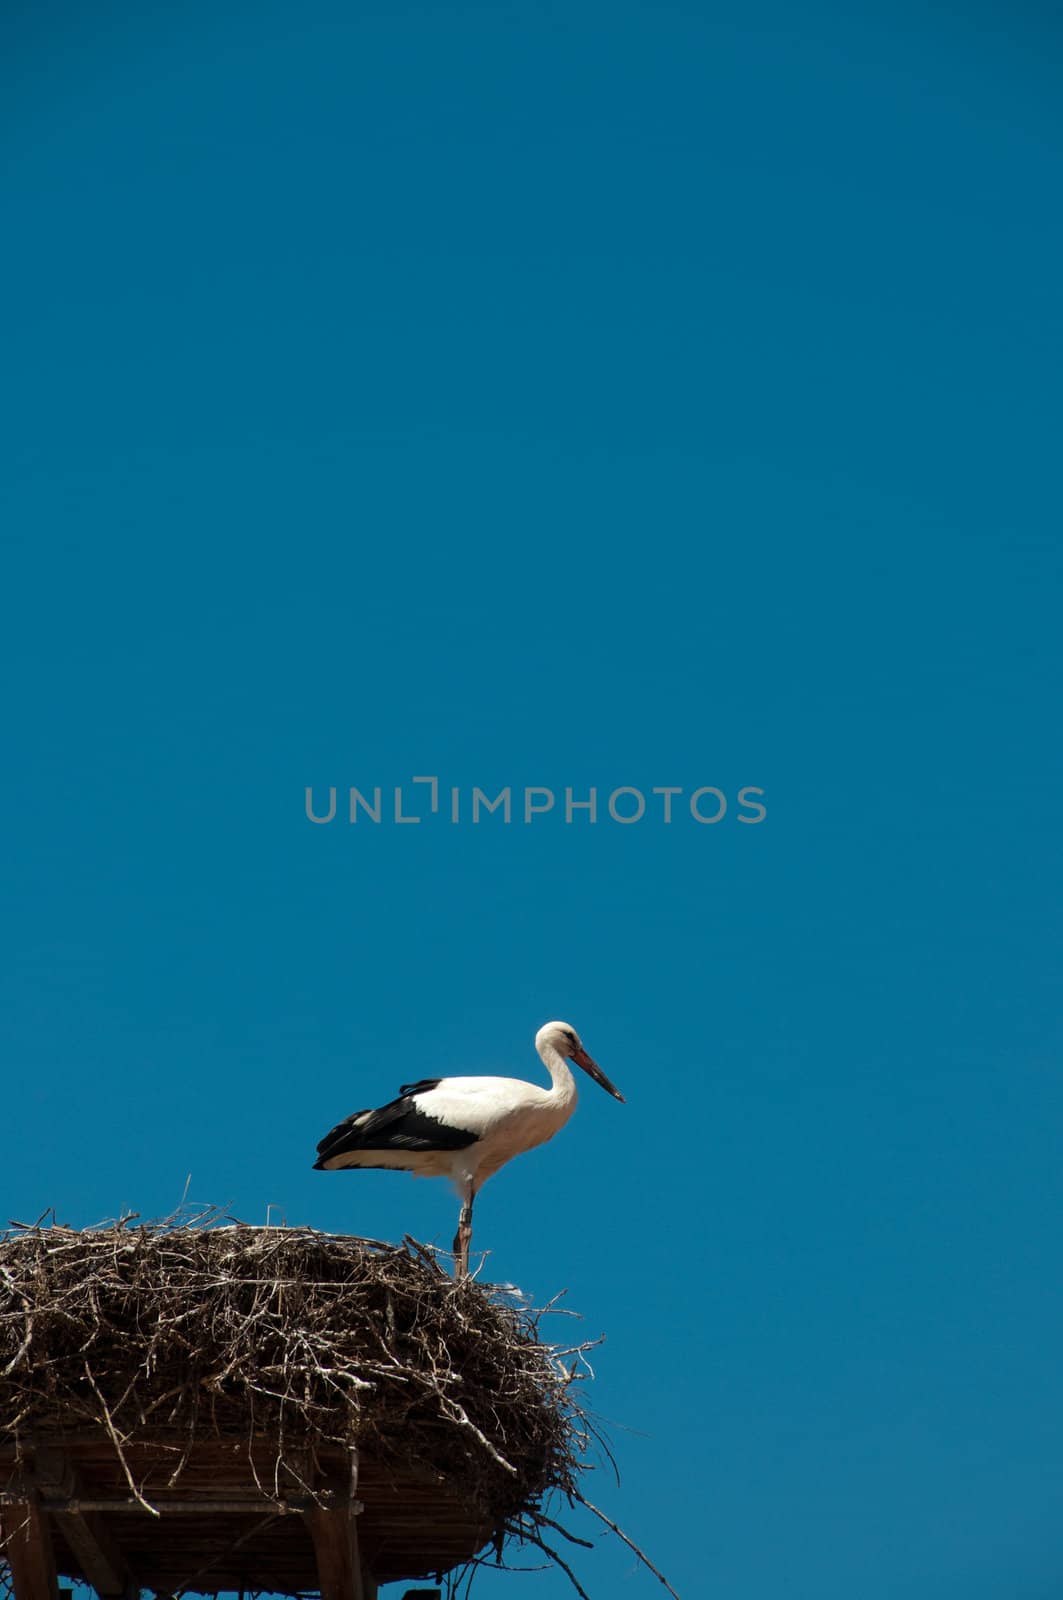 Stork on nest, blue sky behind